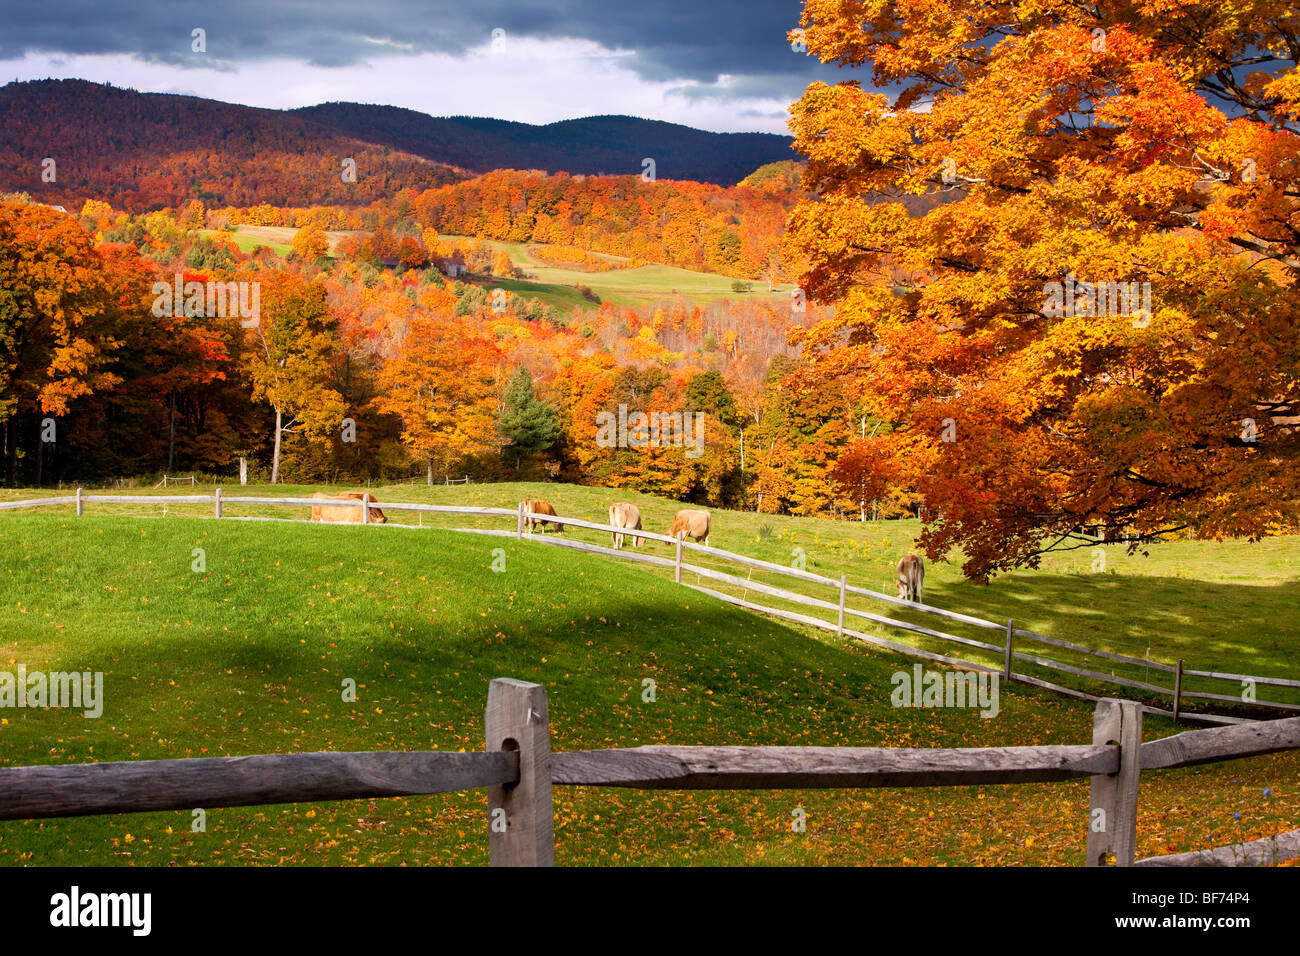 Autumn at a dairy farm near South Woodstock, Vermont, USA Stock Photo